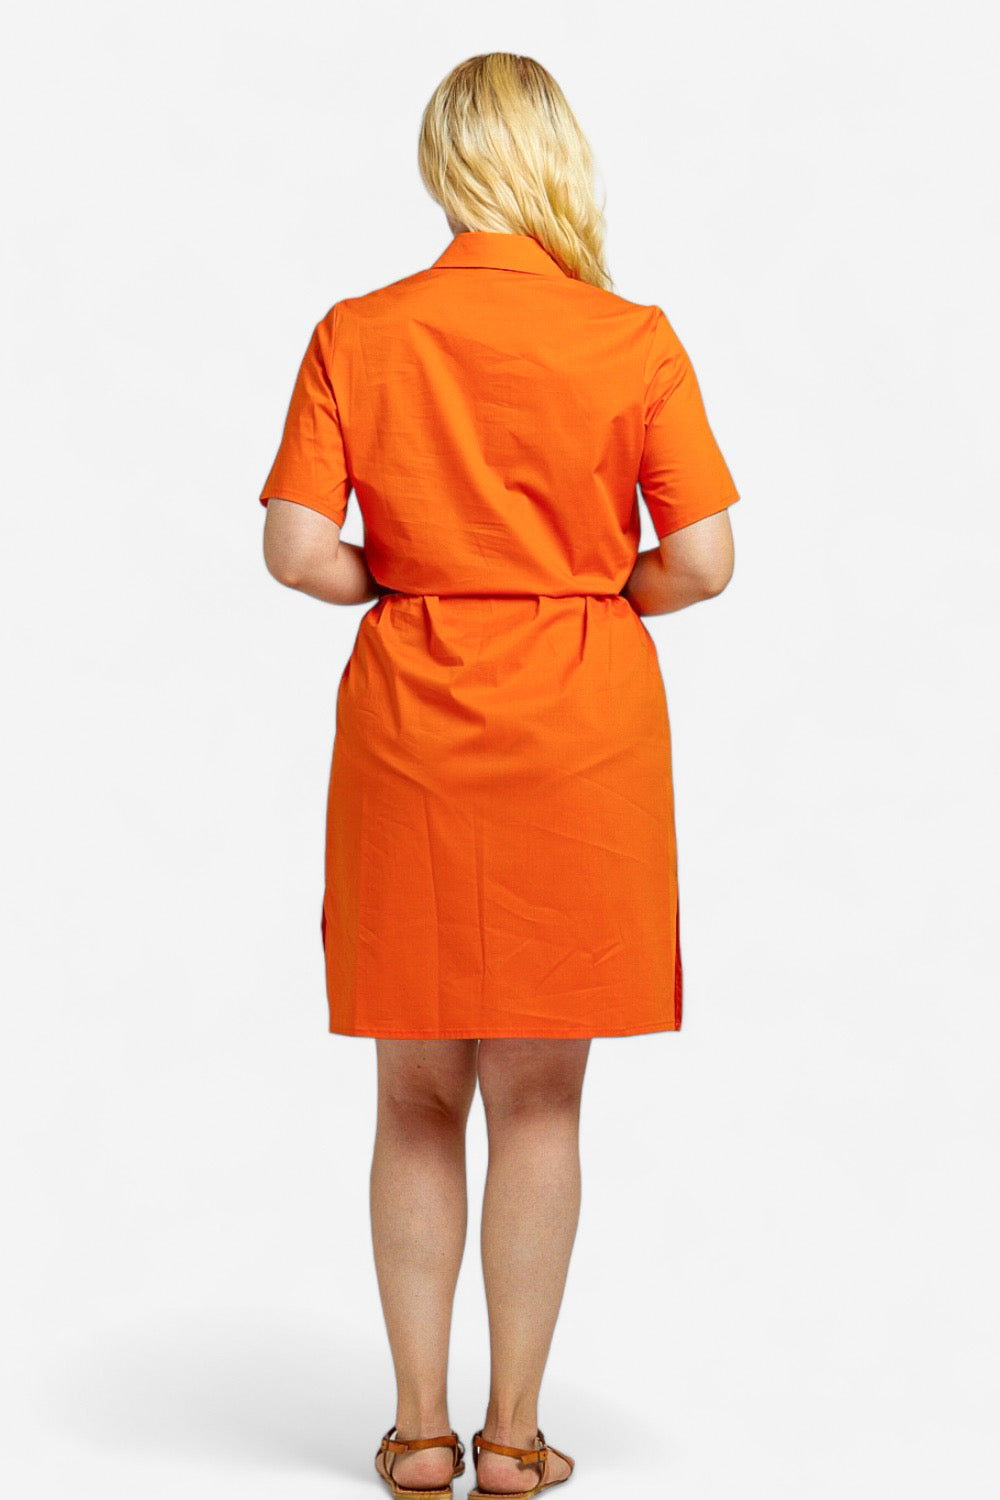 Carolina Plus Size Orange Cotton Utility Shirt Dress by Oltretempo Italian Women's Fashion